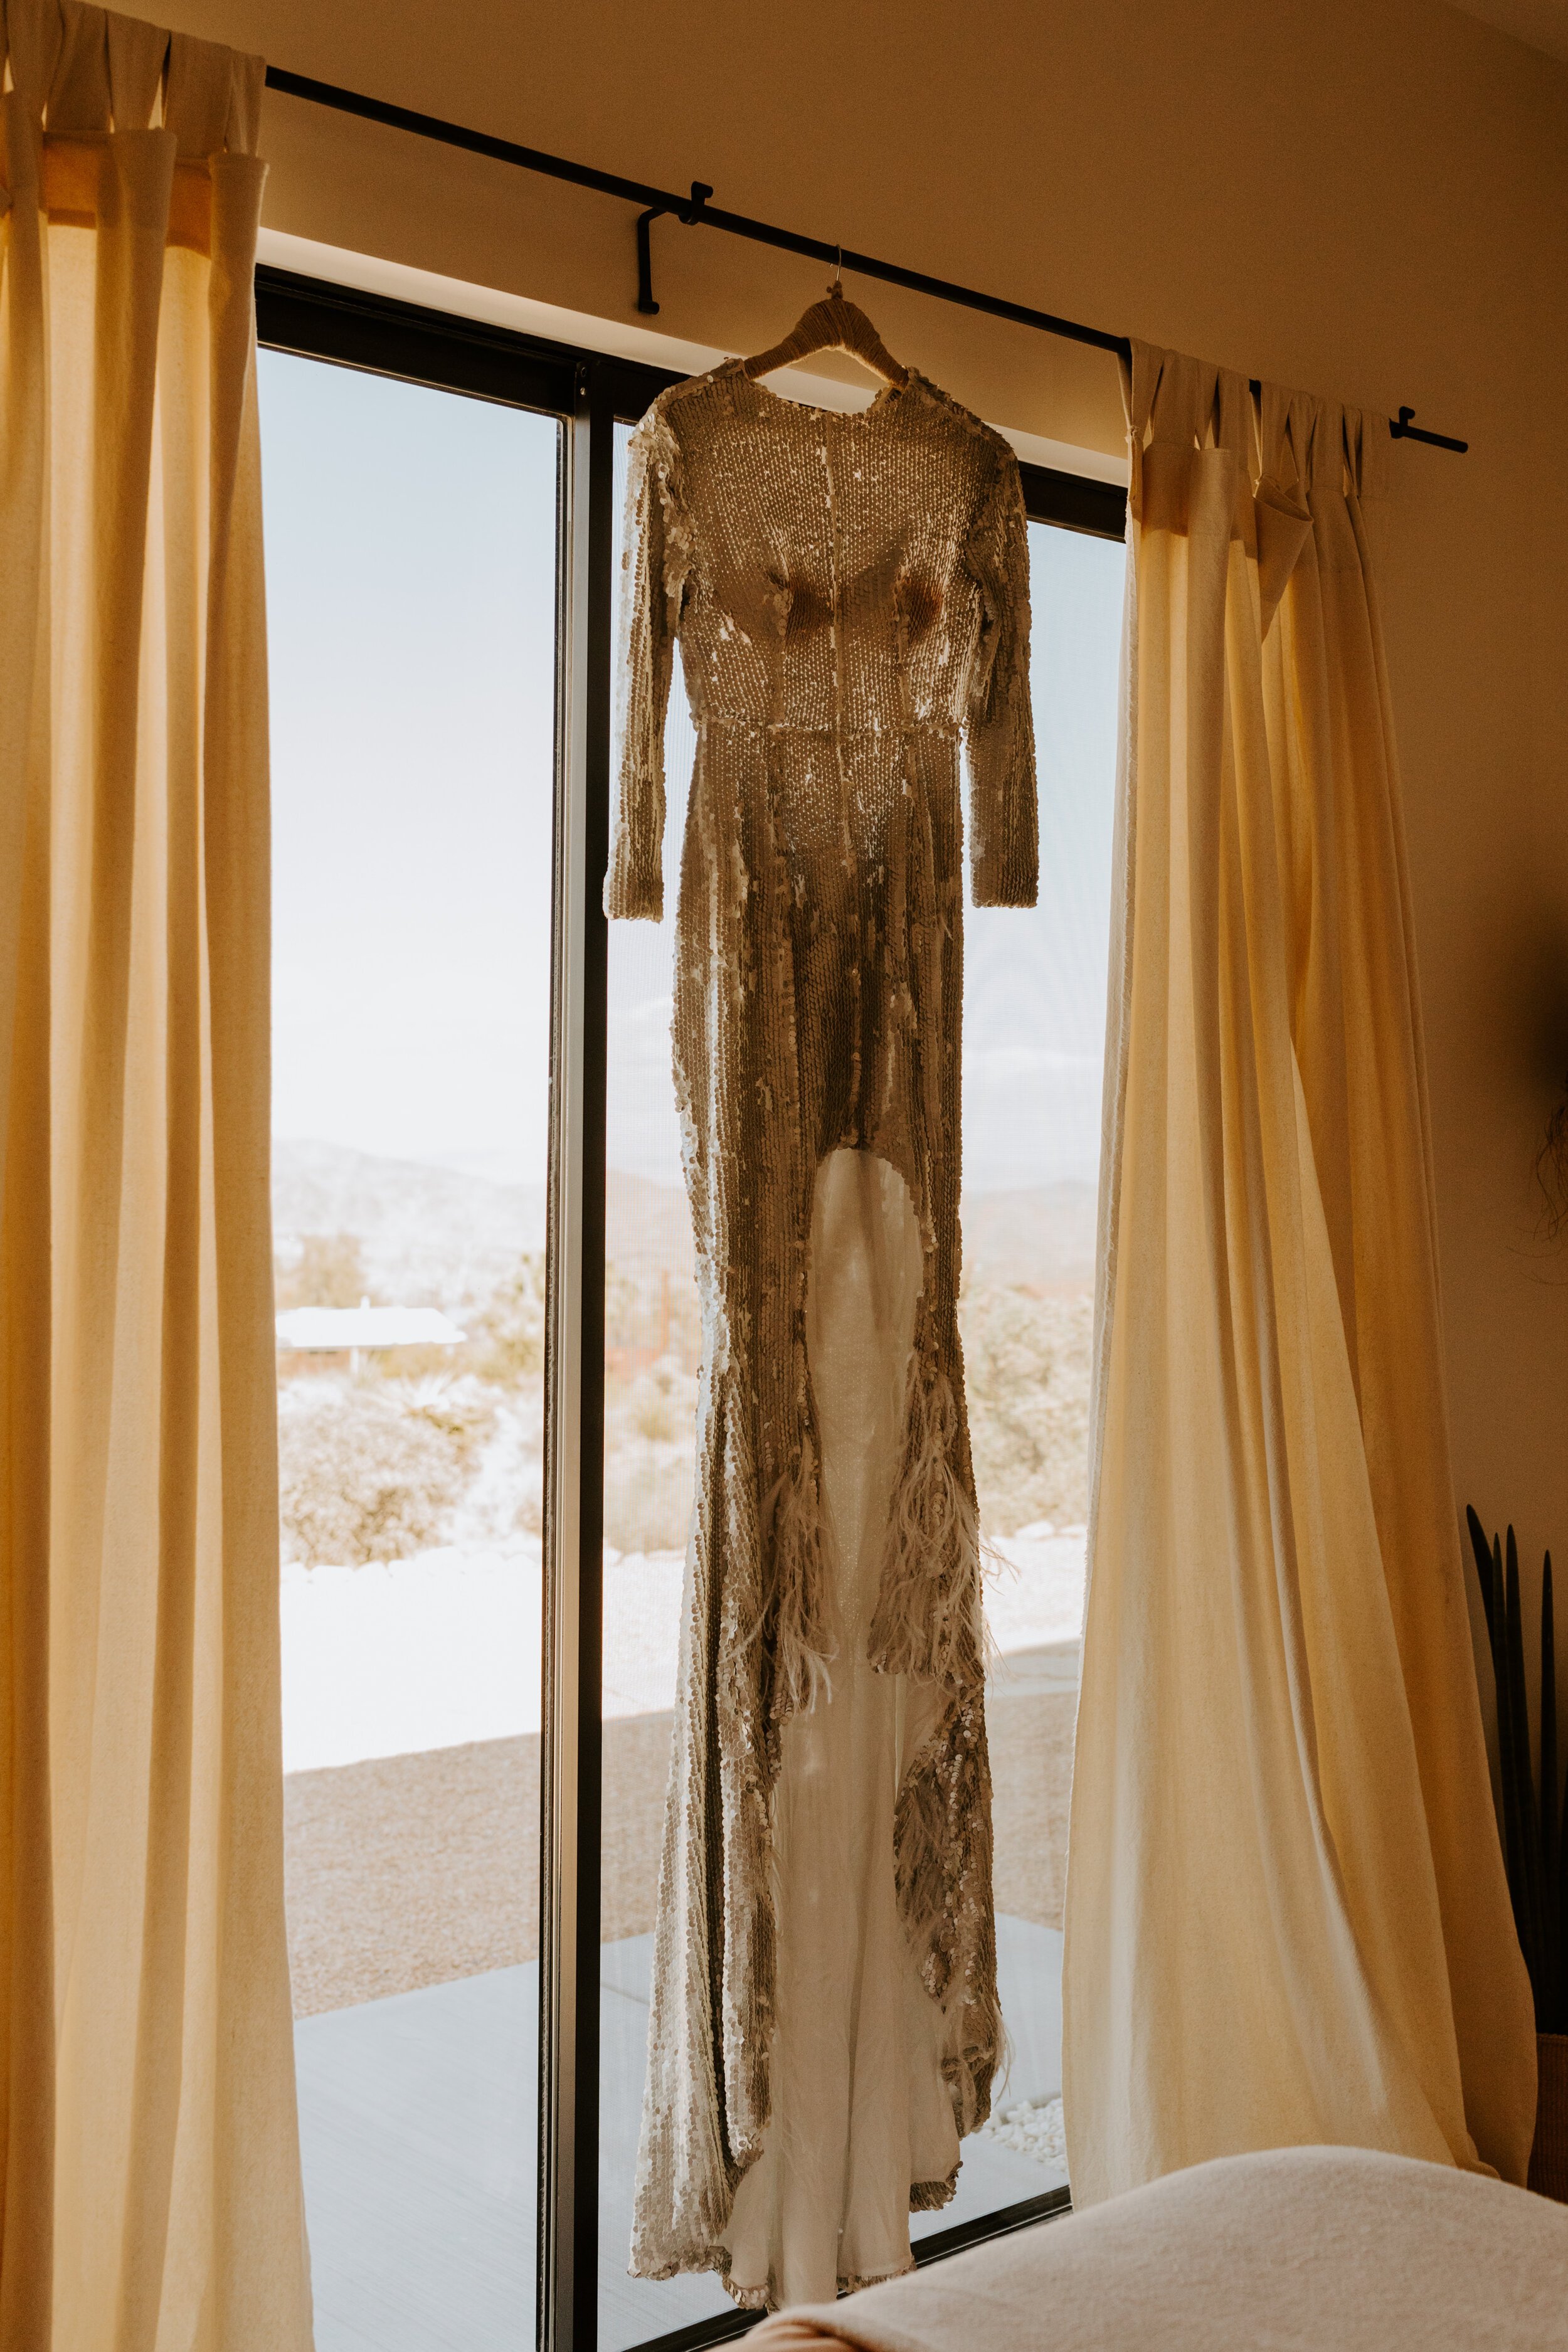 Silver sequin wedding dress | Joshua Tree Elopement | Photo by Tida Svy | www.tidasvy.com